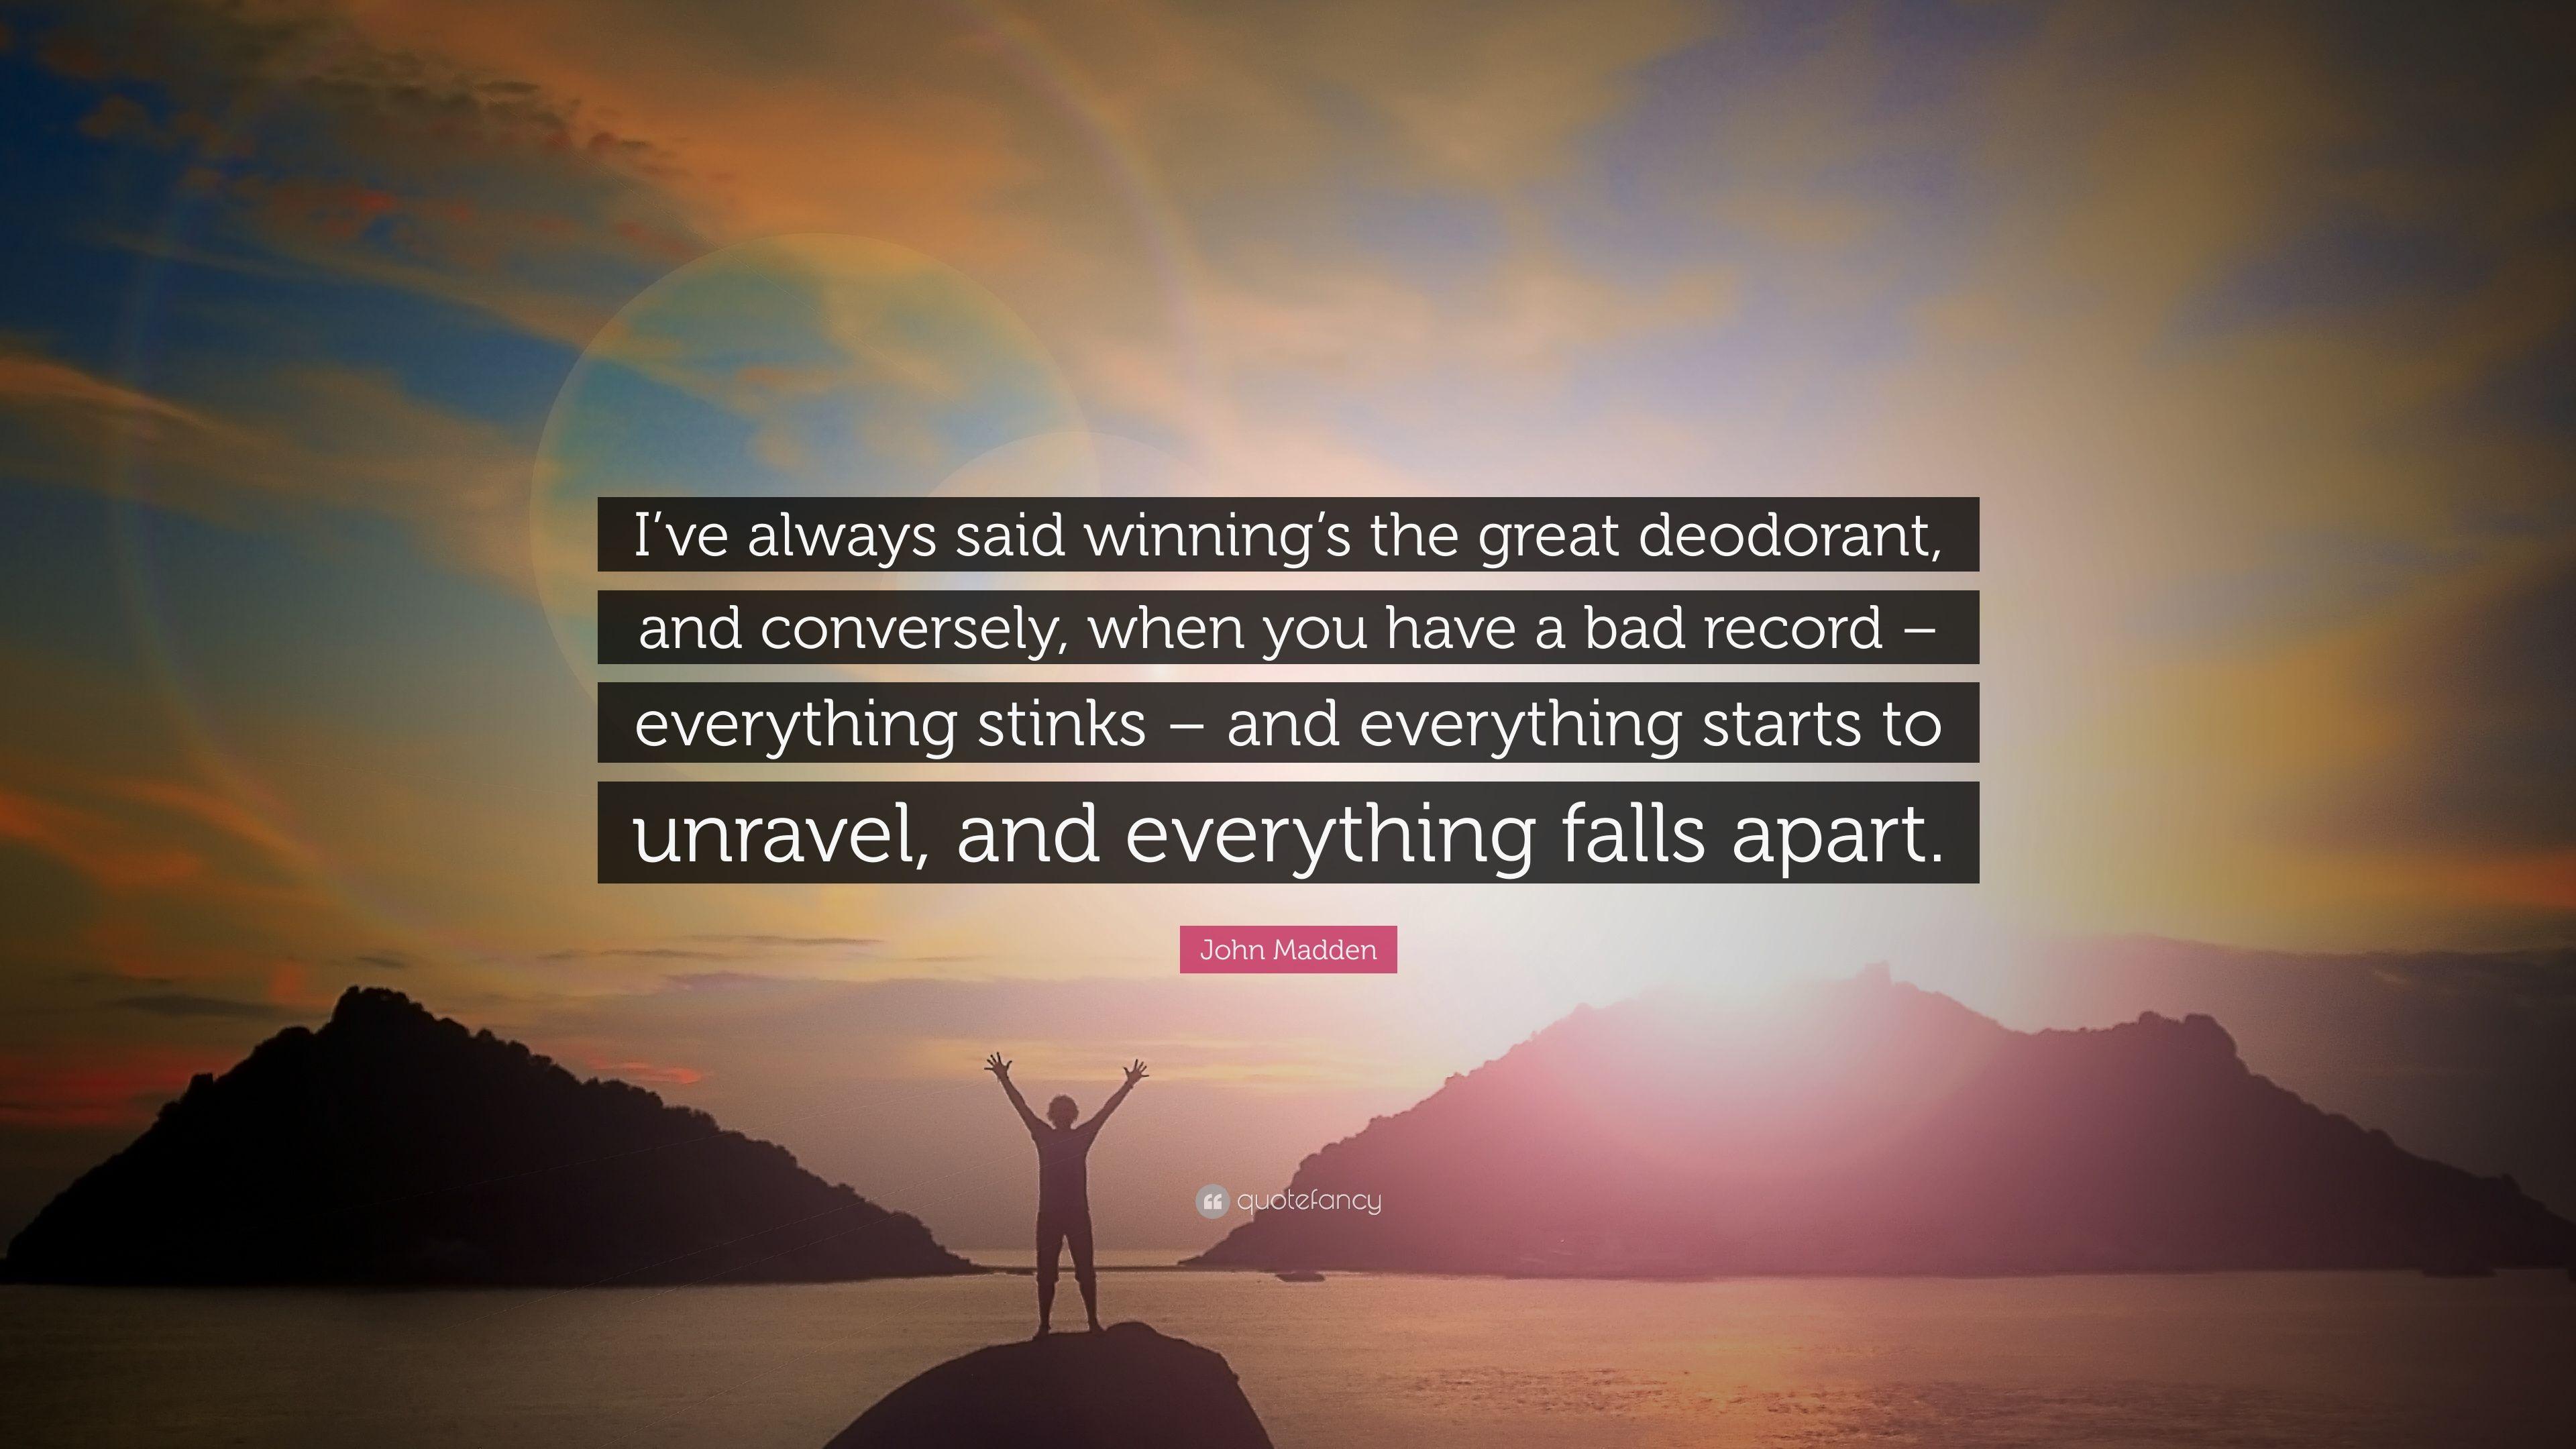 John Madden Quote: “I've always said winning's the great deodorant